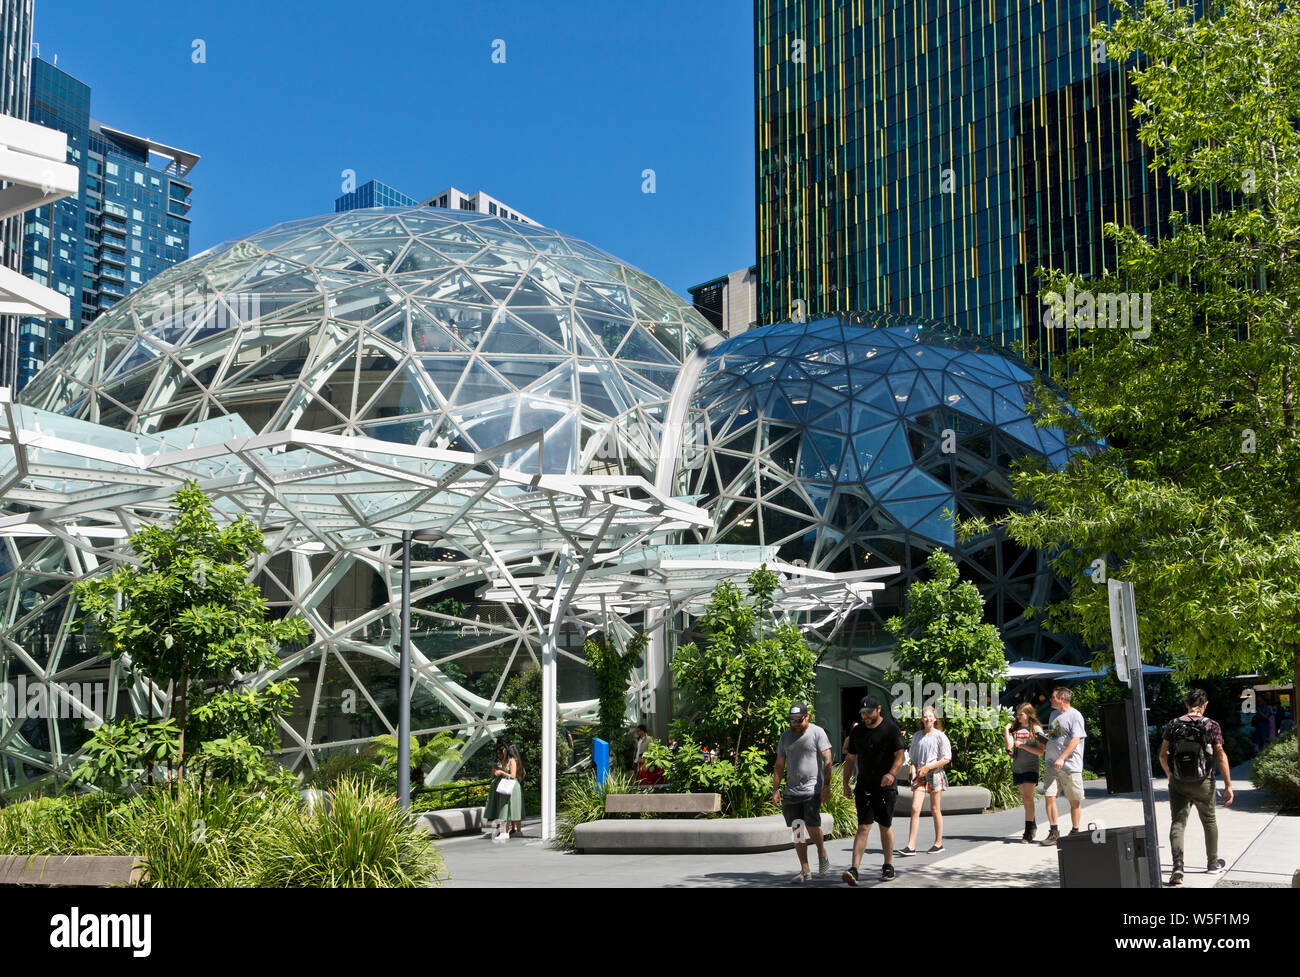 Architectural spheres outside Amazon's headquarters. in Seattle Washington, USA. Stock Photo